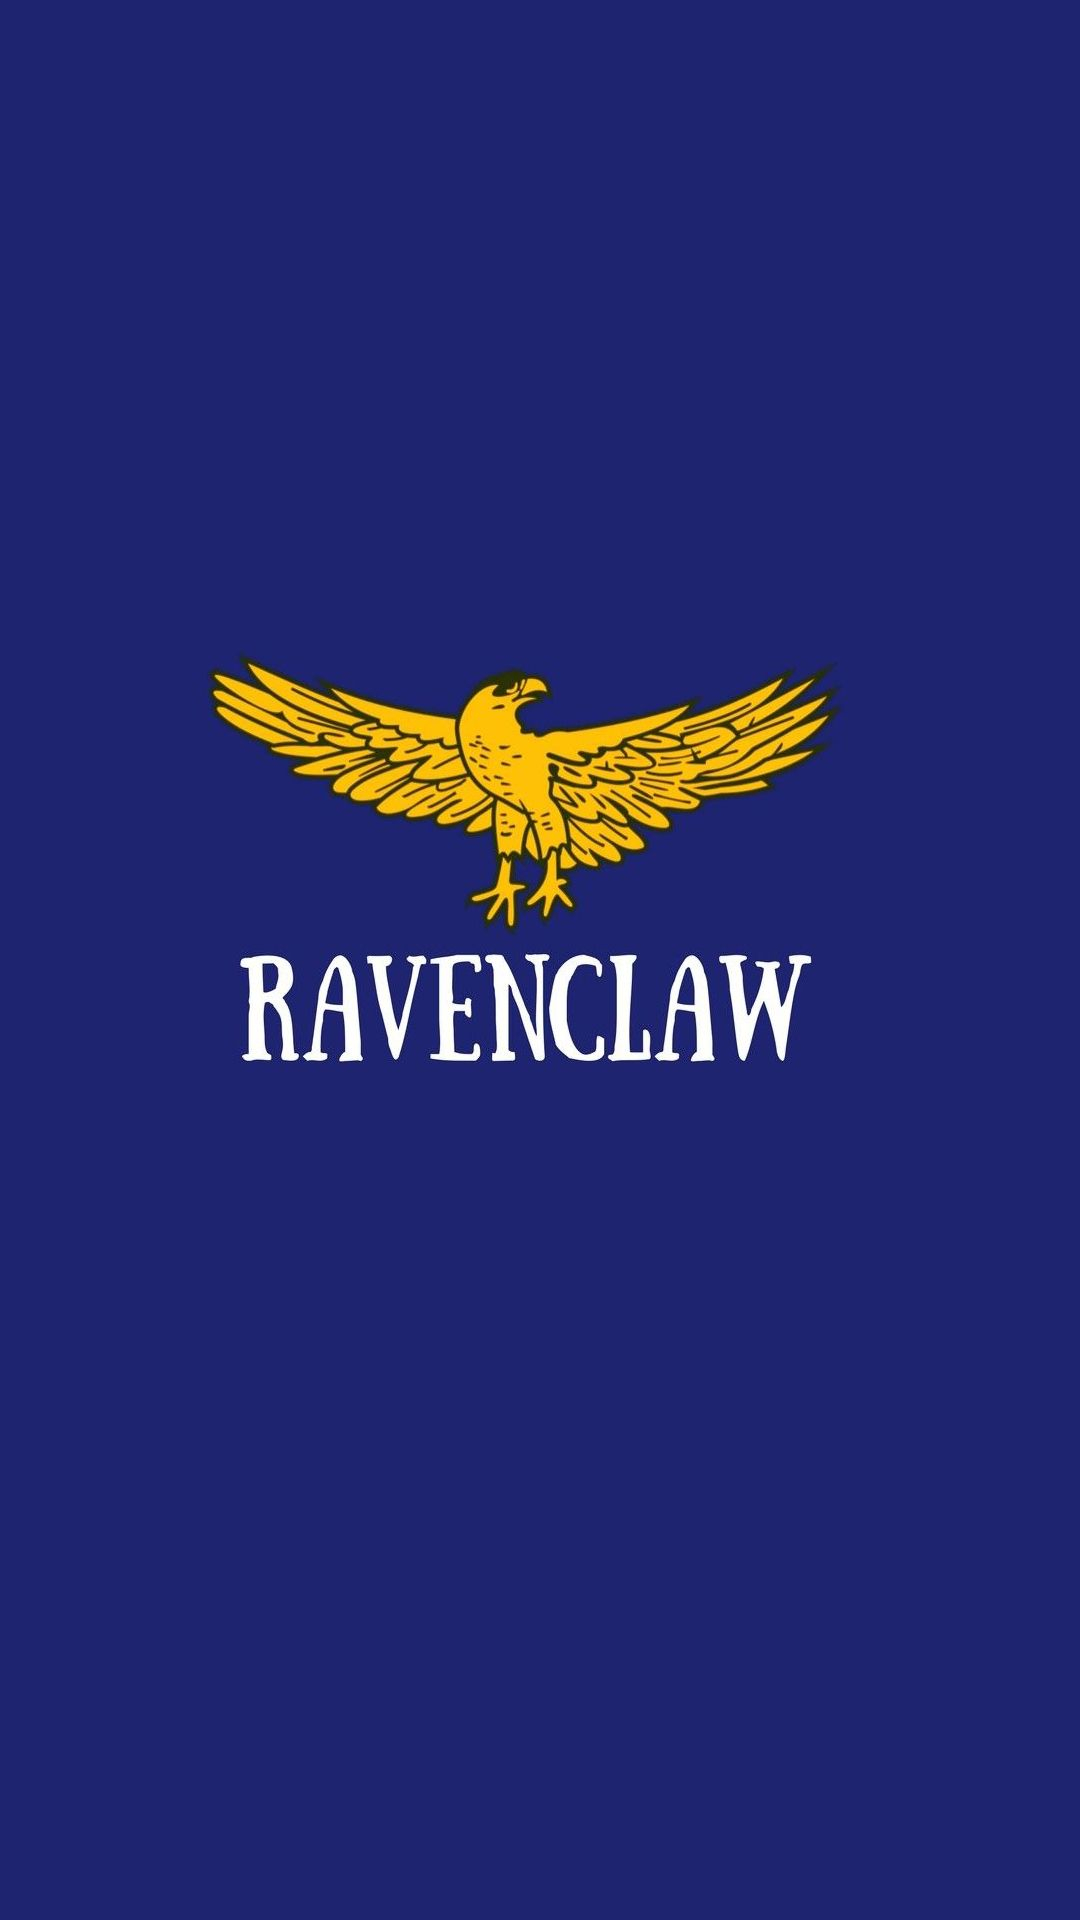 1080x1920 Ravenclaw Wallpaper 167 | Ravenclaw, Website